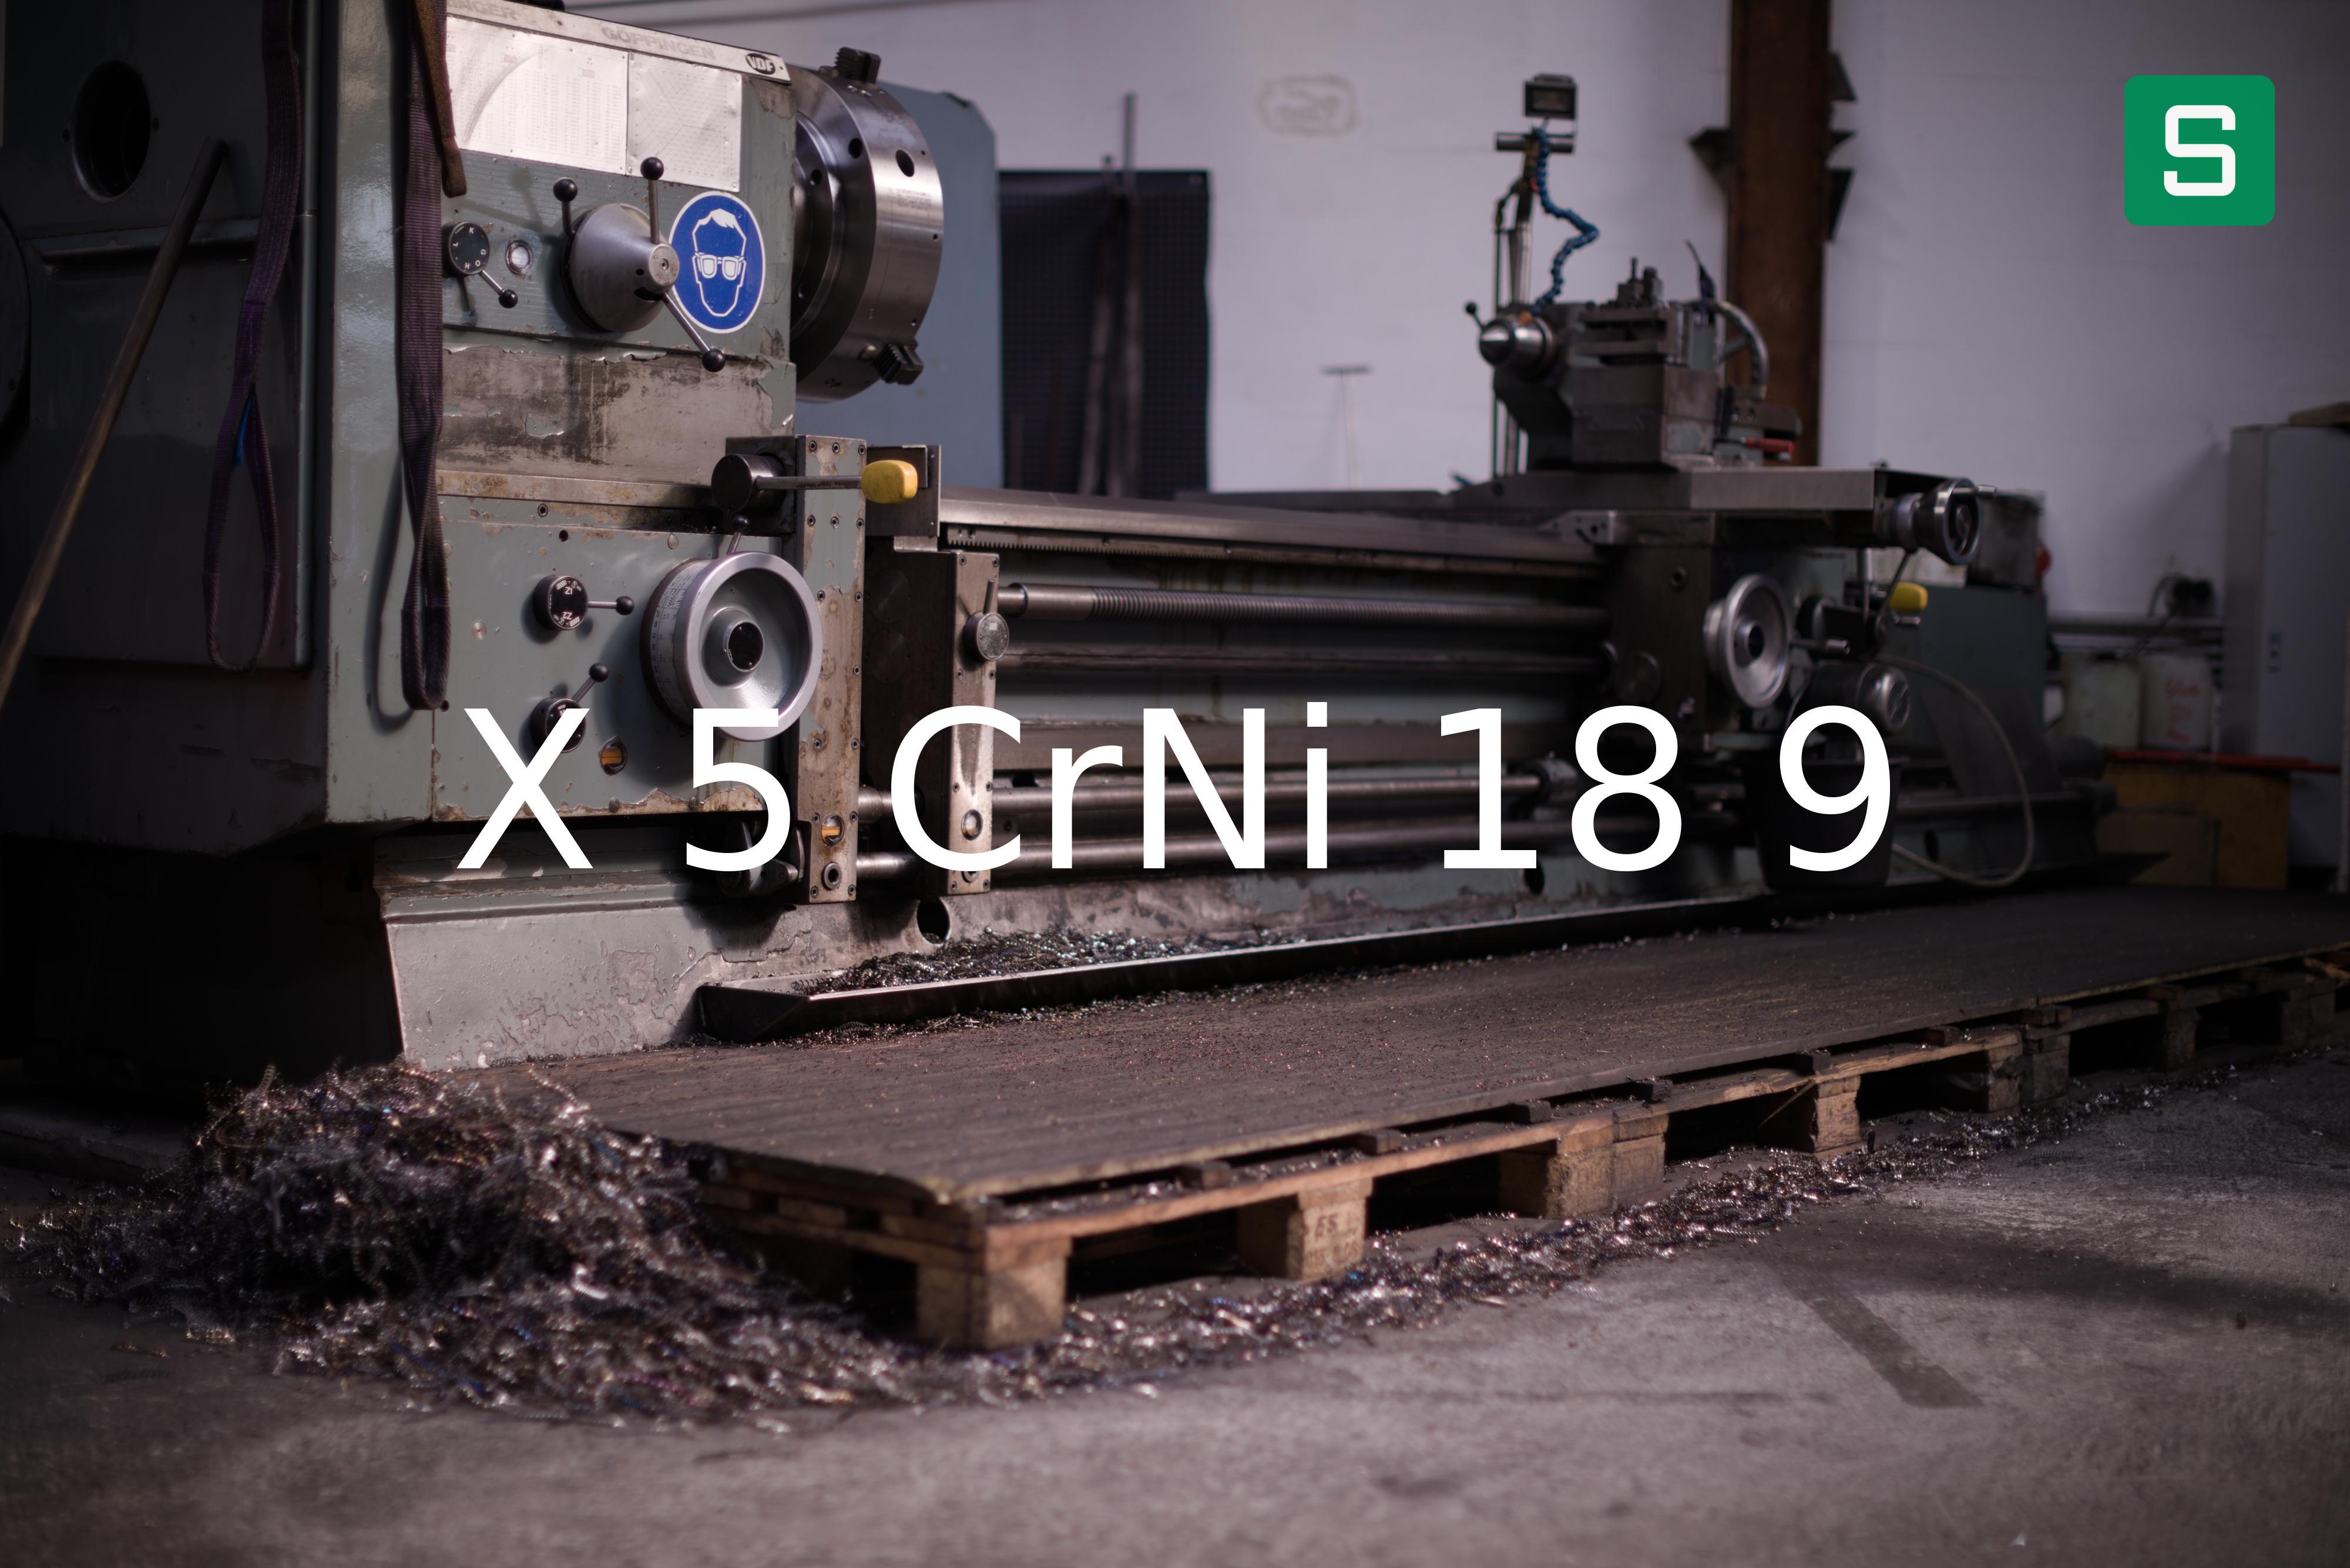 Steel Material: X 5 CrNi 18 9